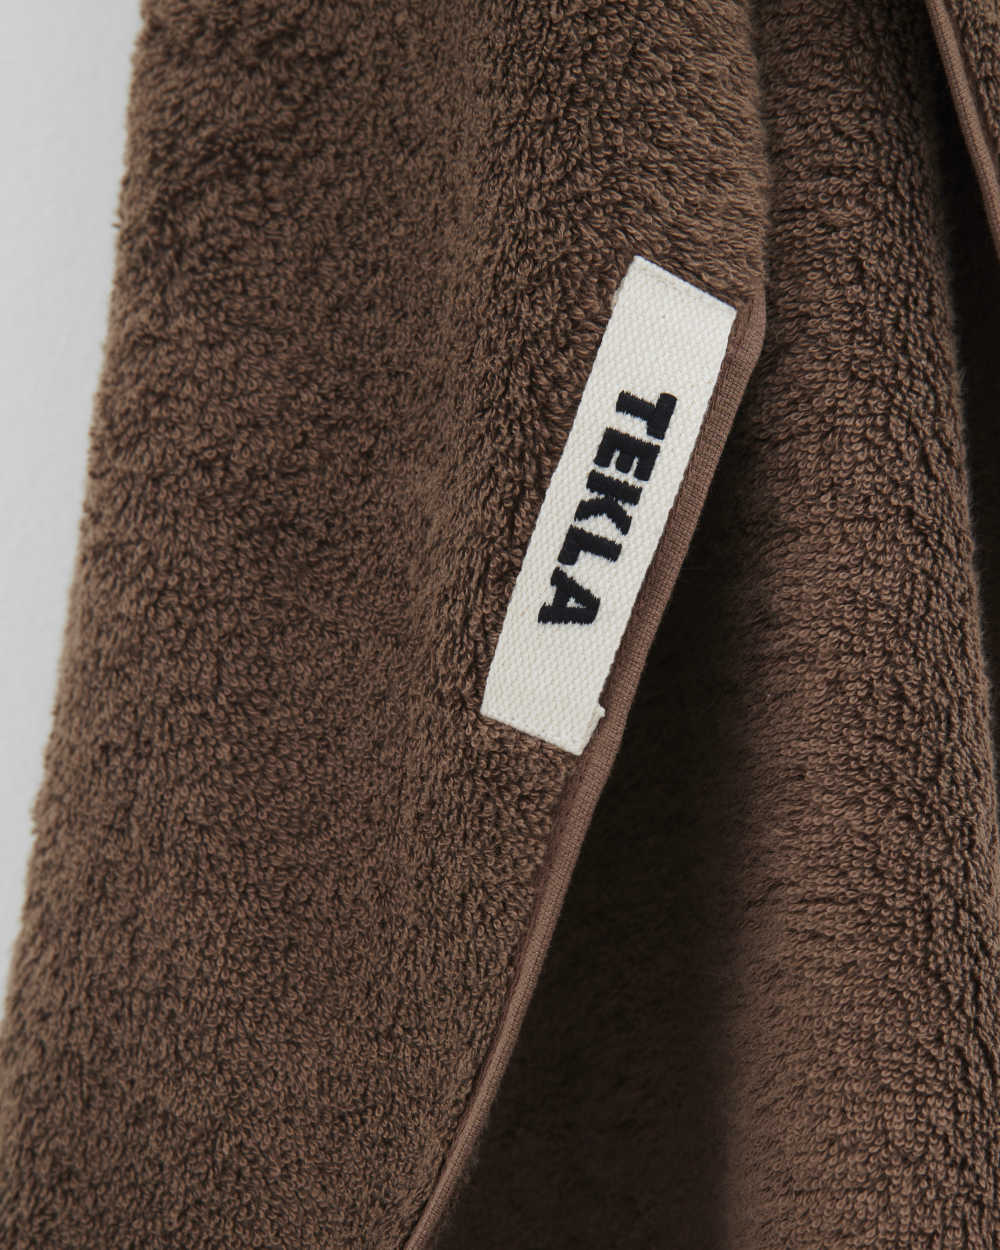 Towels | Tekla Fabrics